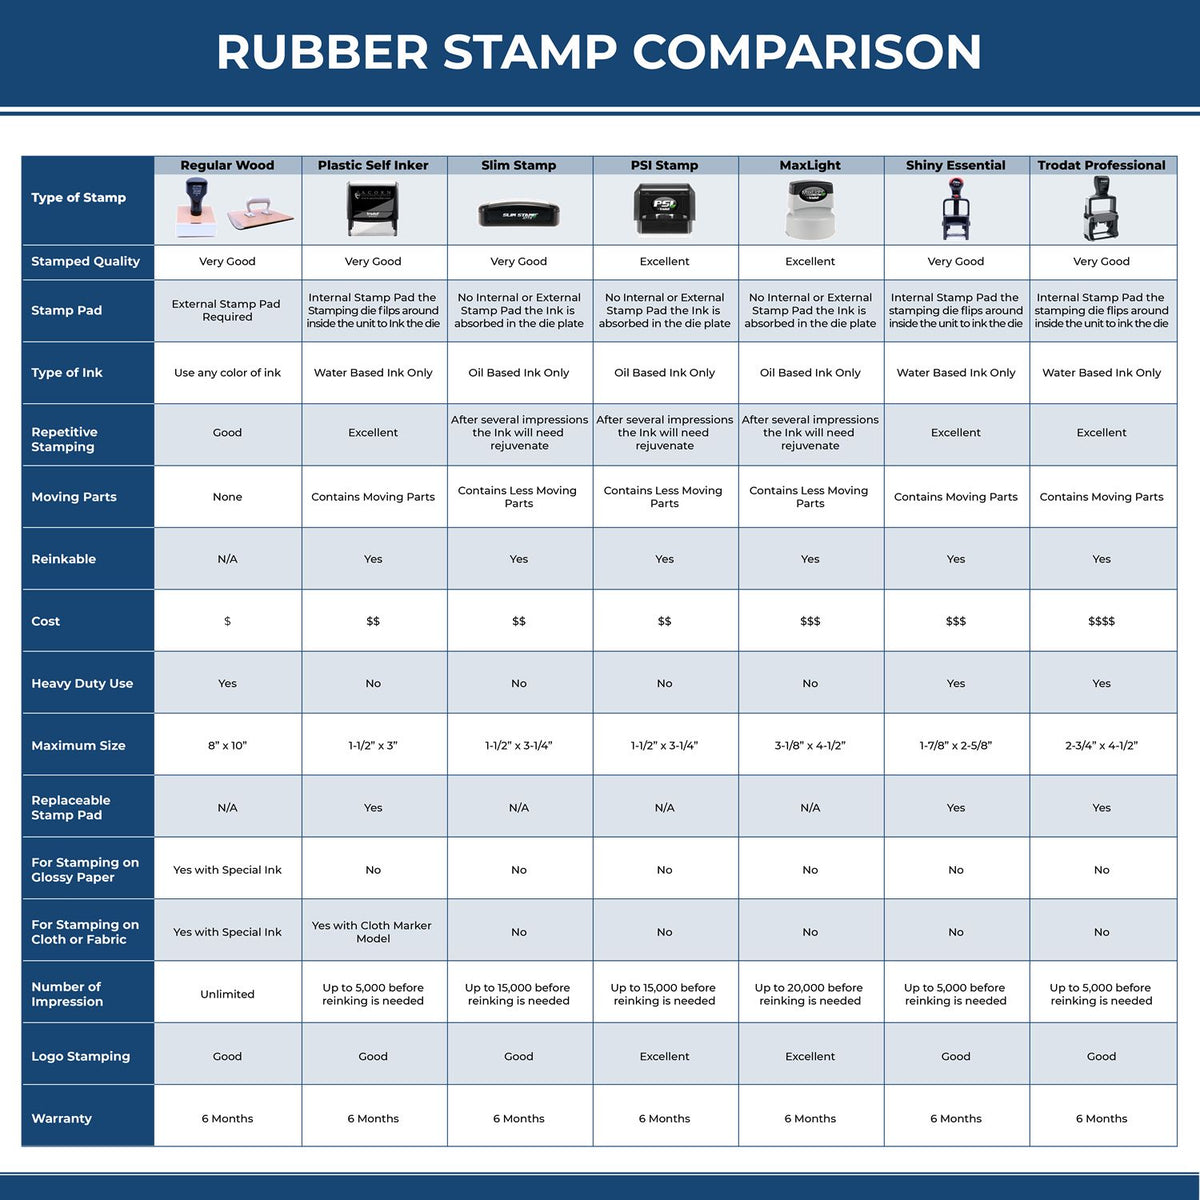 Application Incomplete Rubber Stamp 4255R Rubber Stamp Comparison